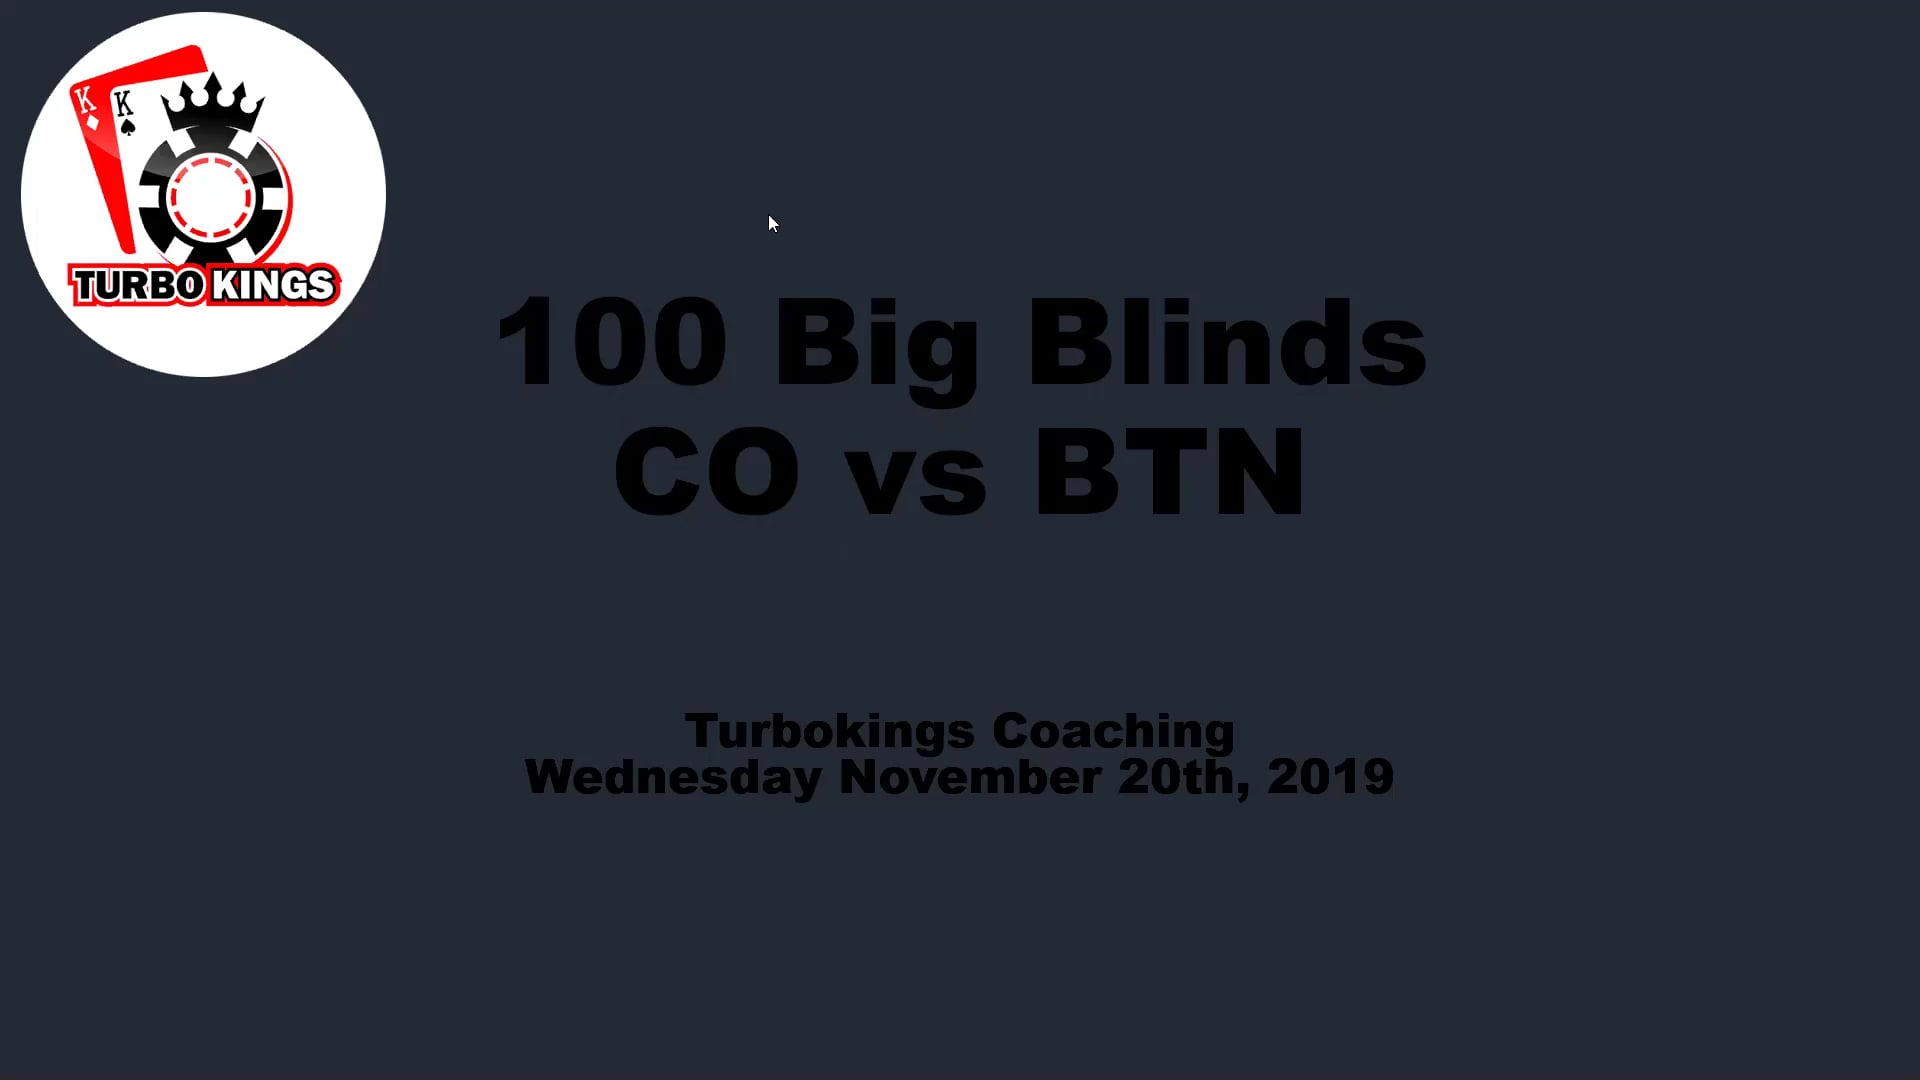 November 20th - 100BB CO vs BTN